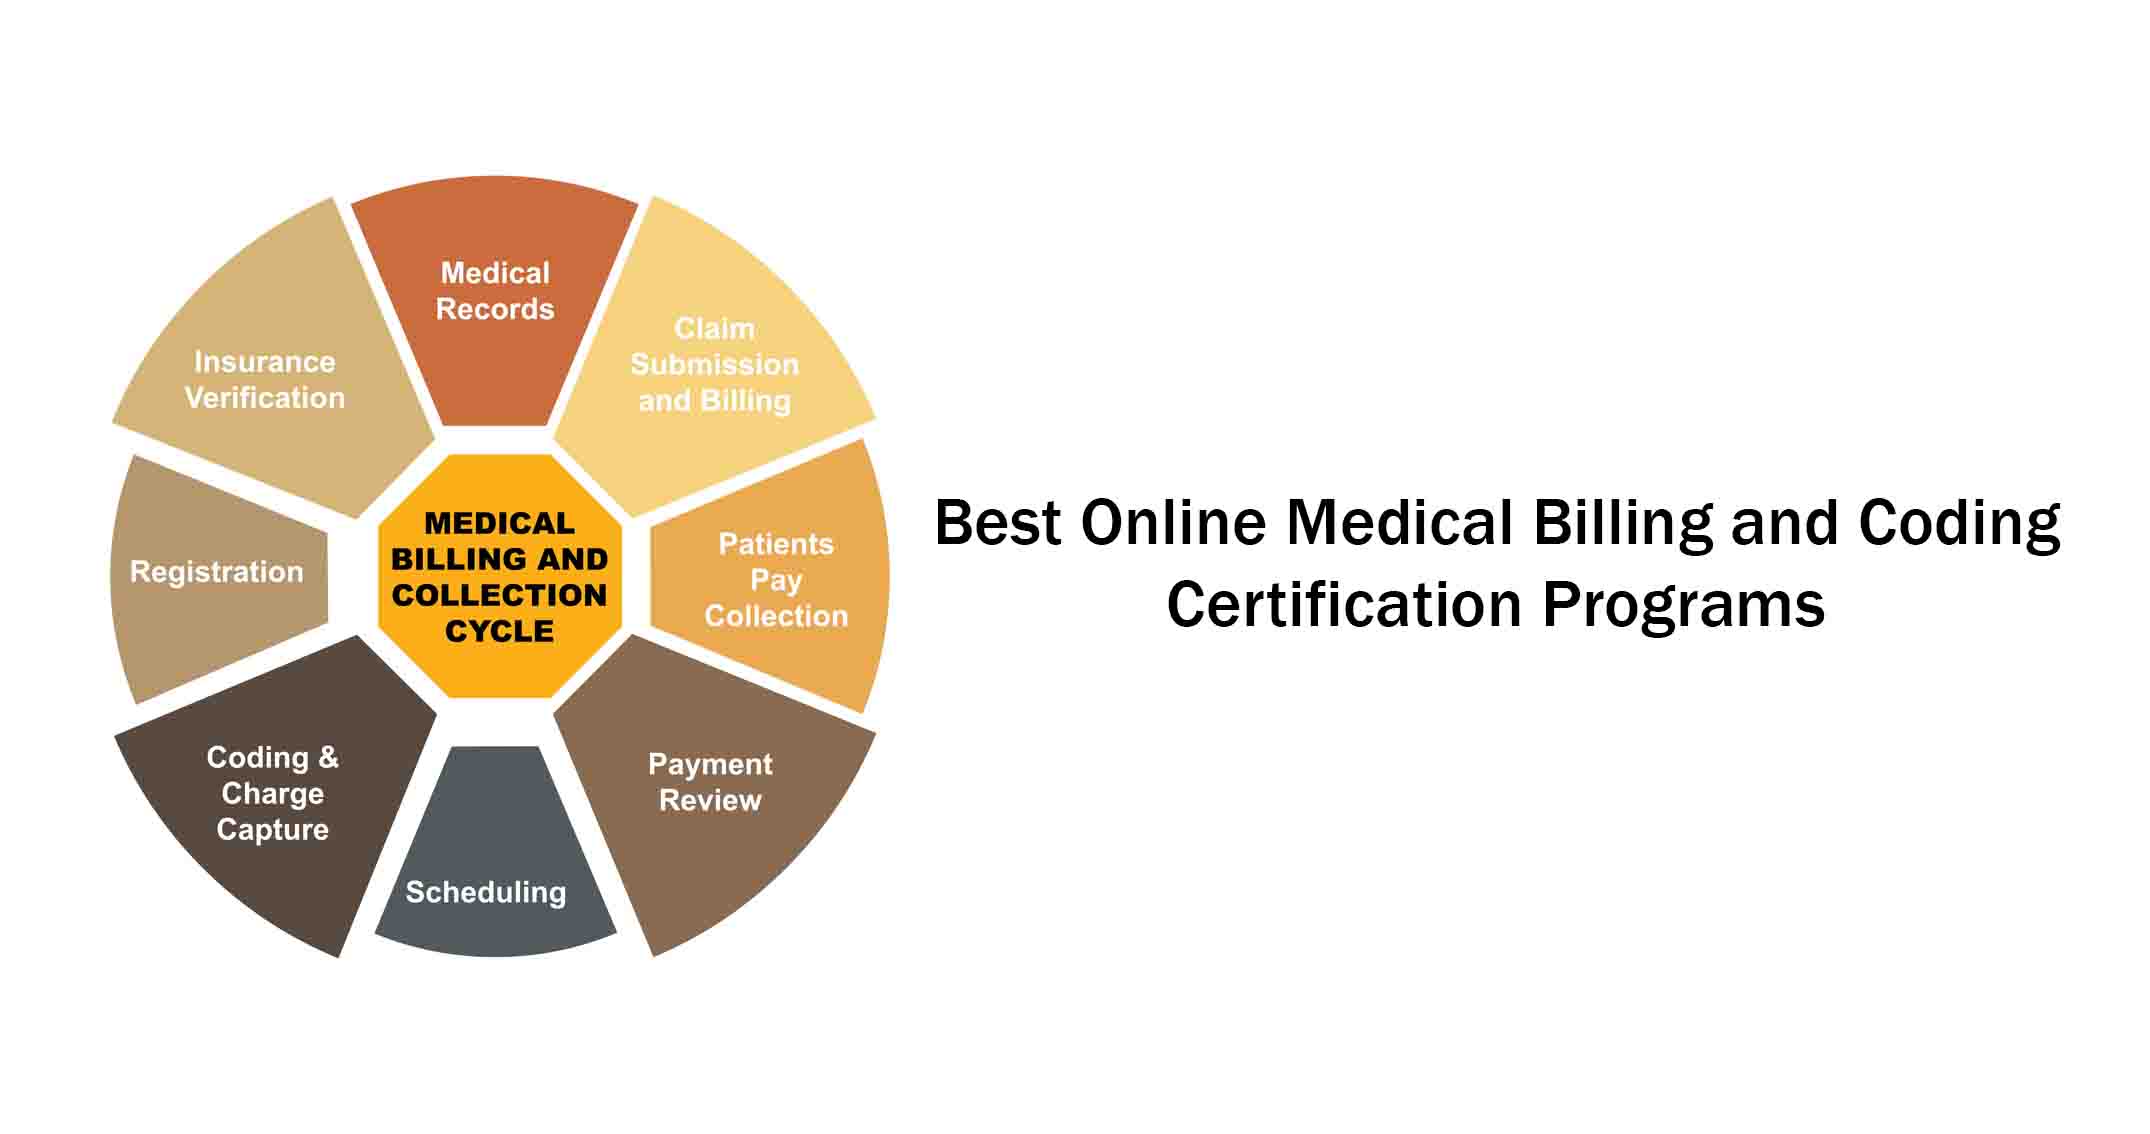 Best Online Medical Billing and Coding Certification Programs